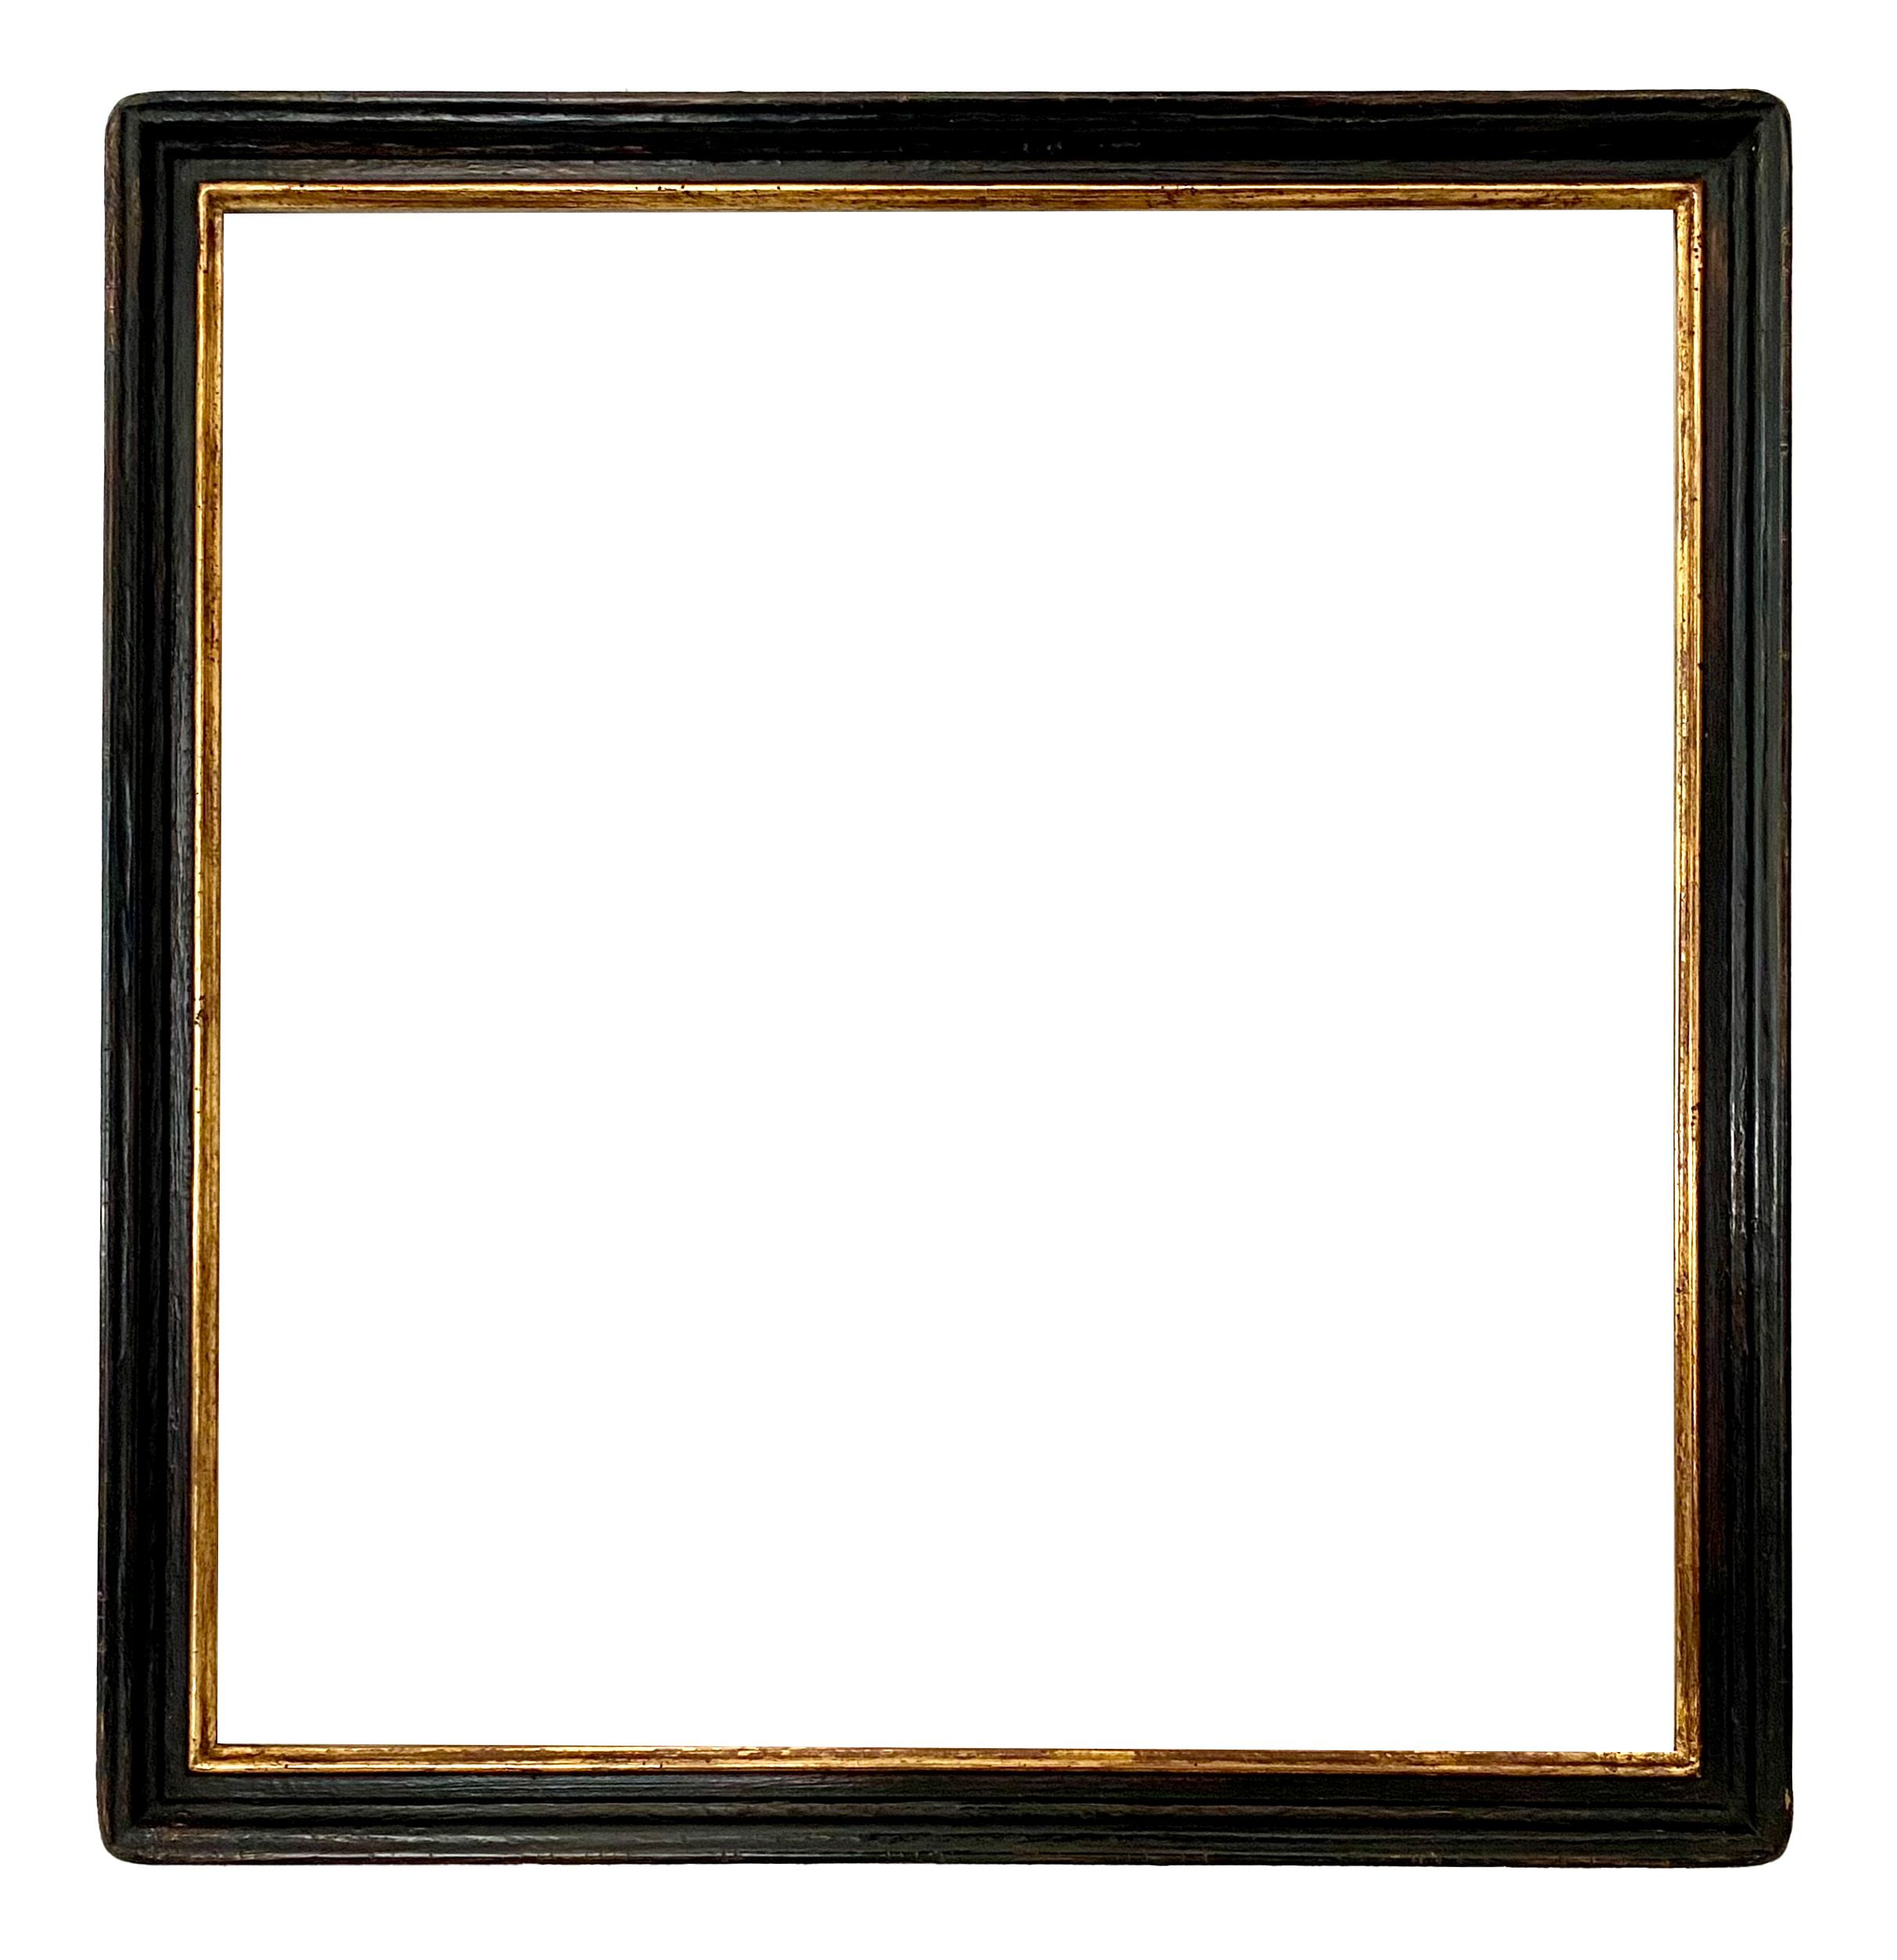 Renaissance Style Frame - 46.80 x 44.20 - REF- 1692